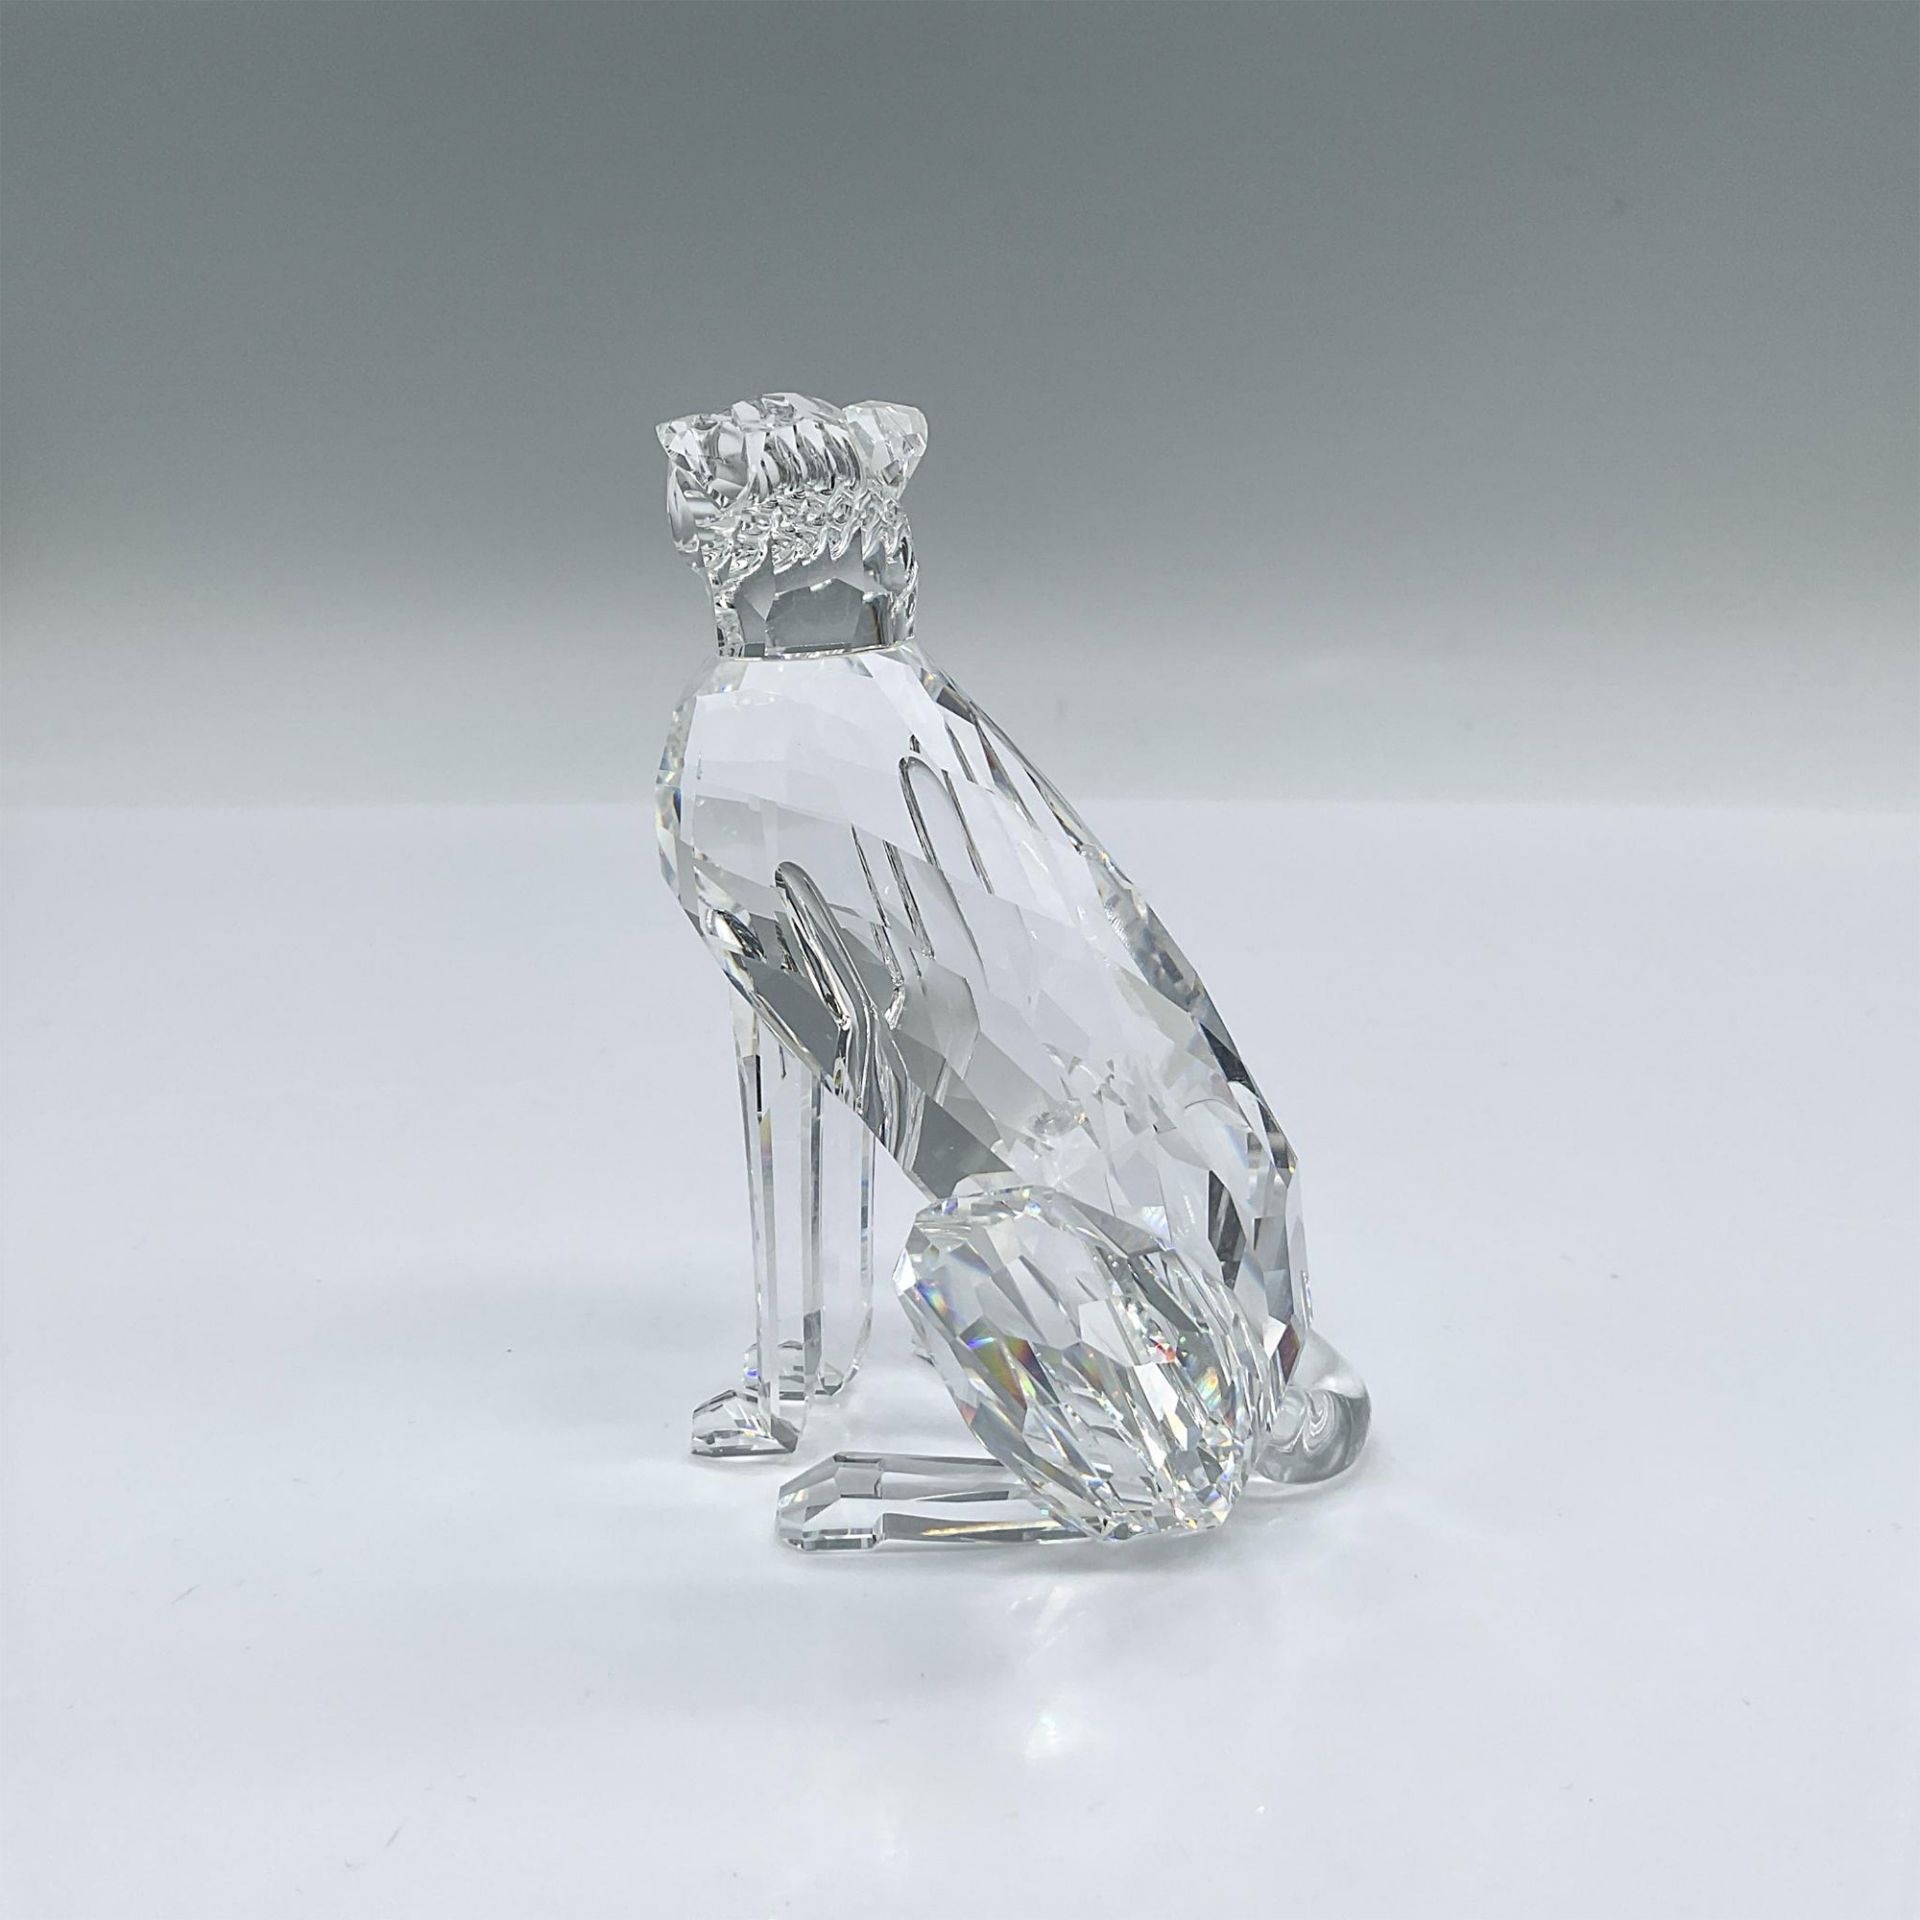 Swarovski Silver Crystal Figurine, Cheetah - High Tail - Image 2 of 4